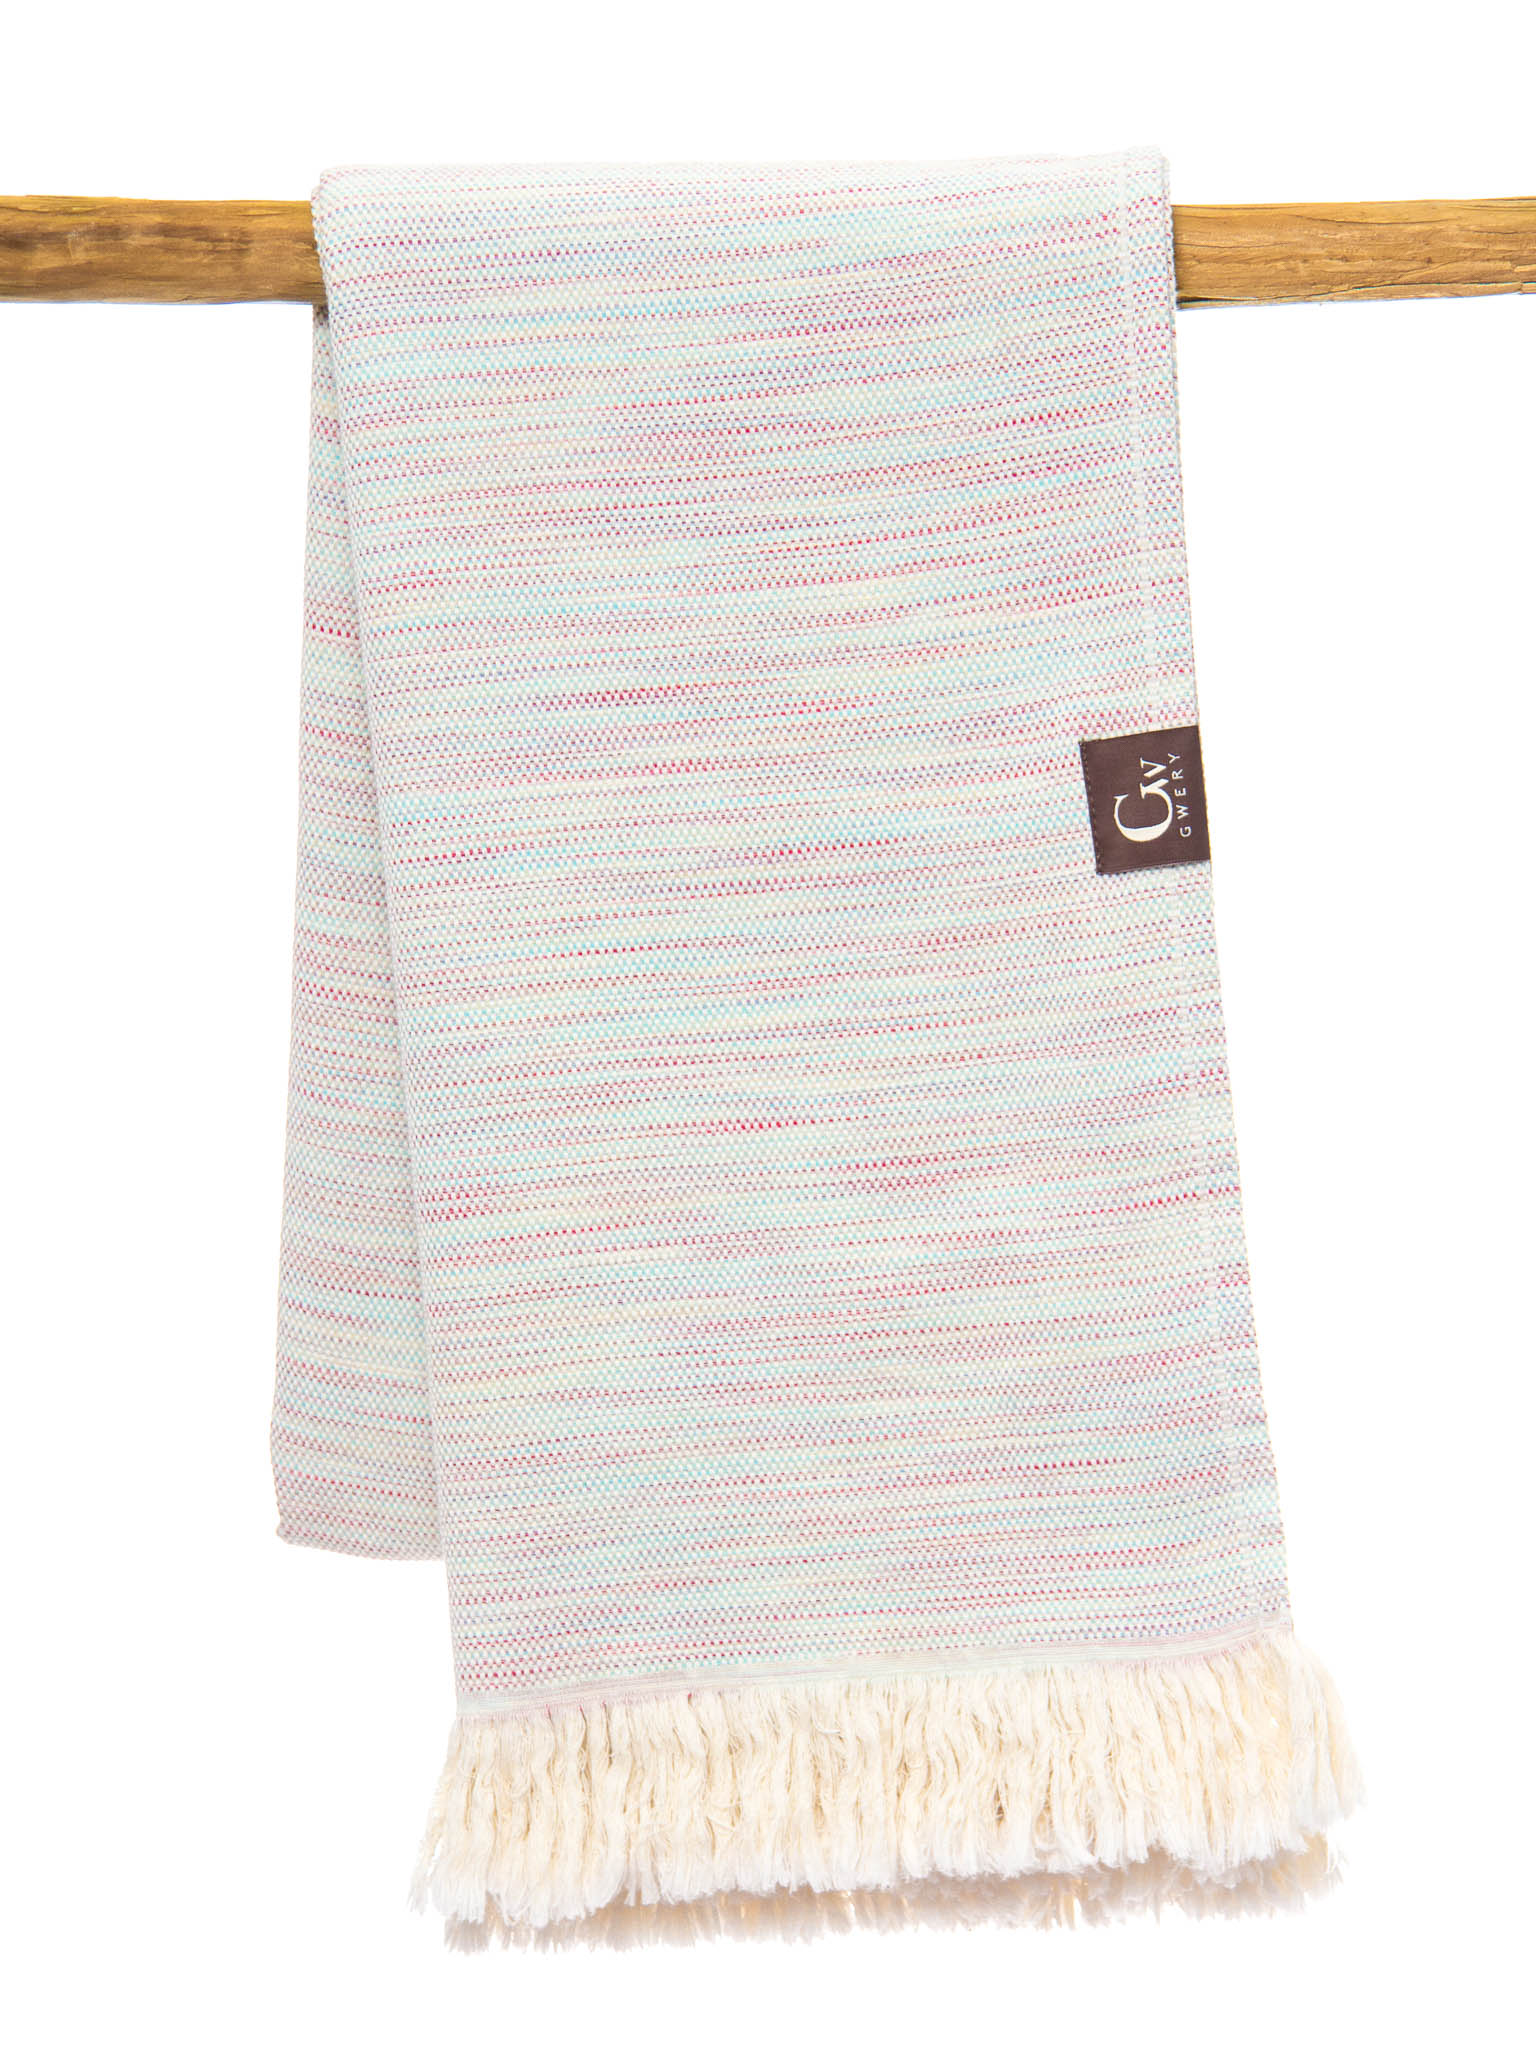 pink patterned lightweight beach towel folded